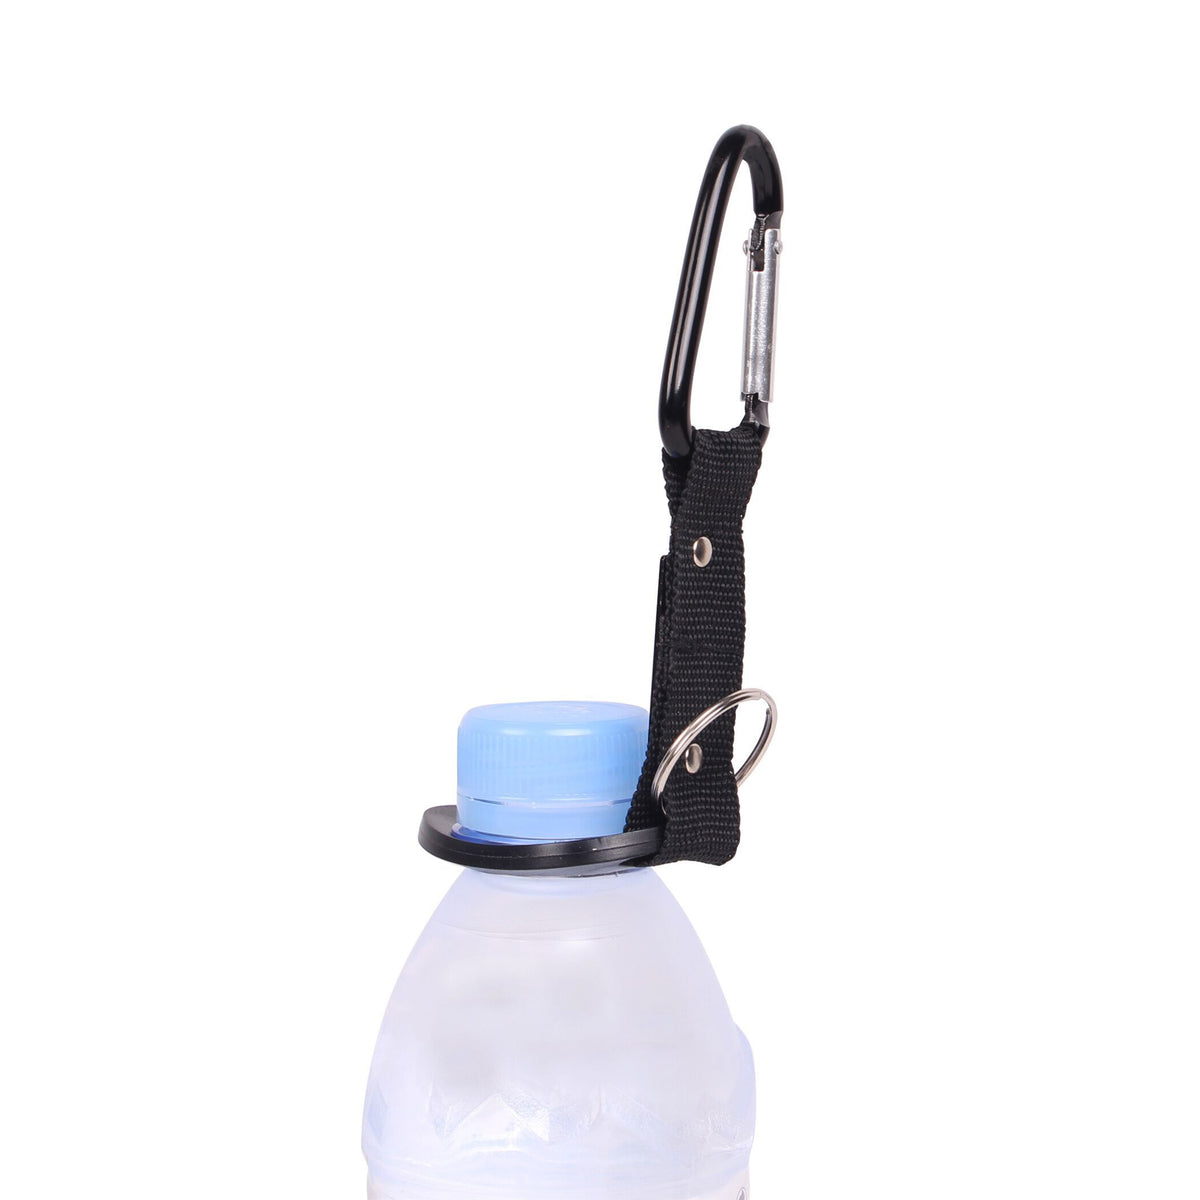 Water Bottle Holder with Carabiner - Slip On